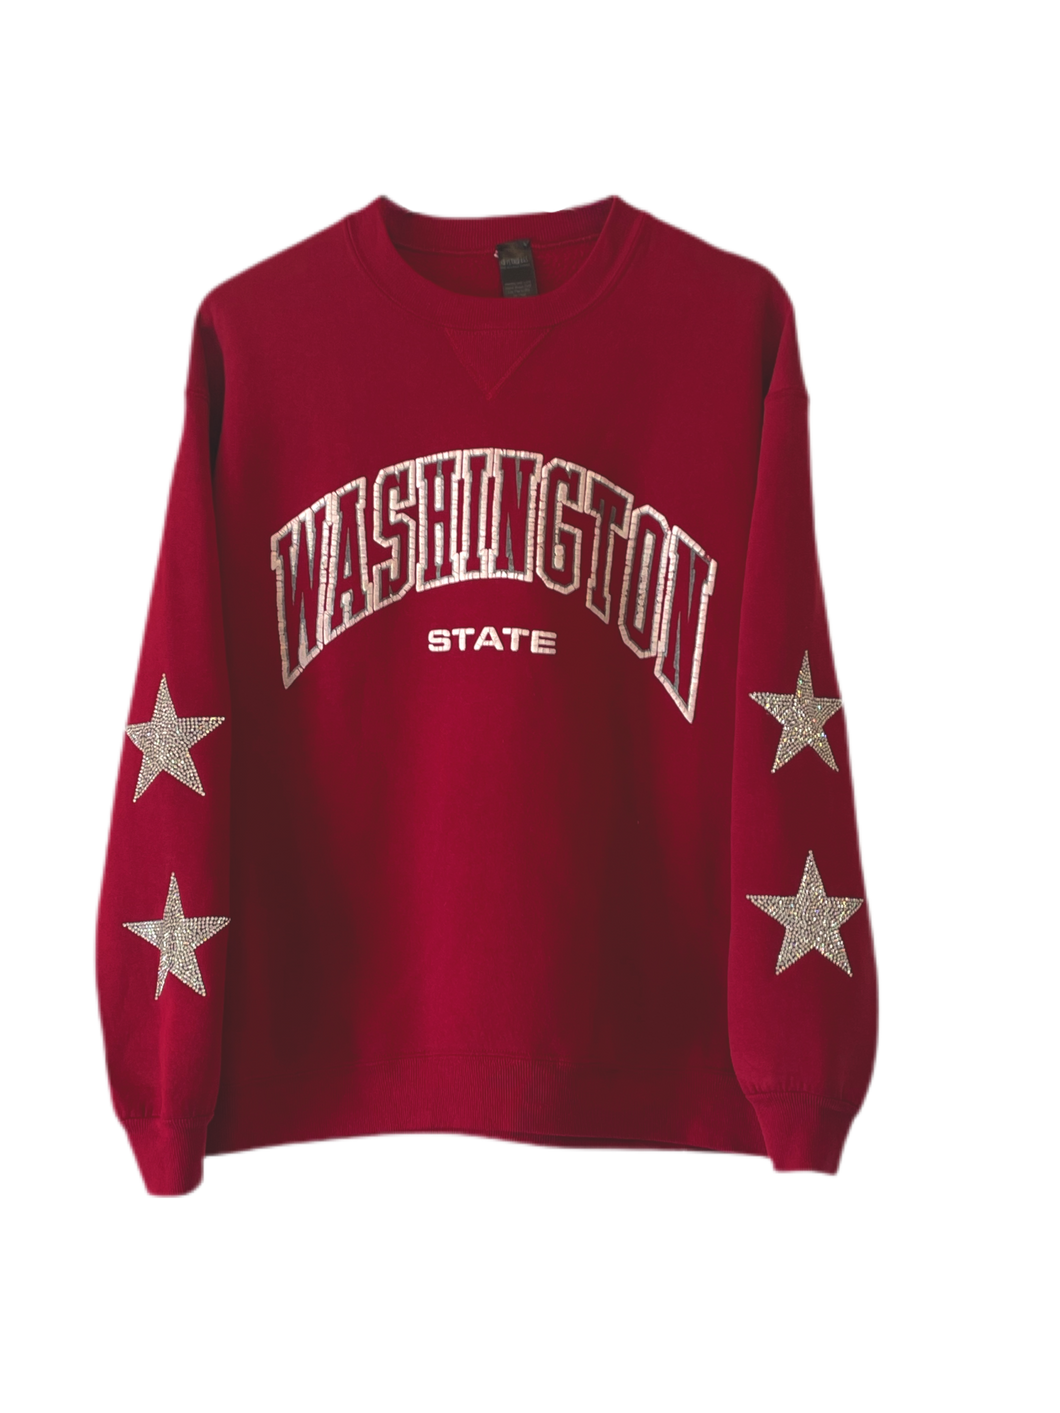 Washington State University, One of a KIND Sweatshirt with Crystal Star Design